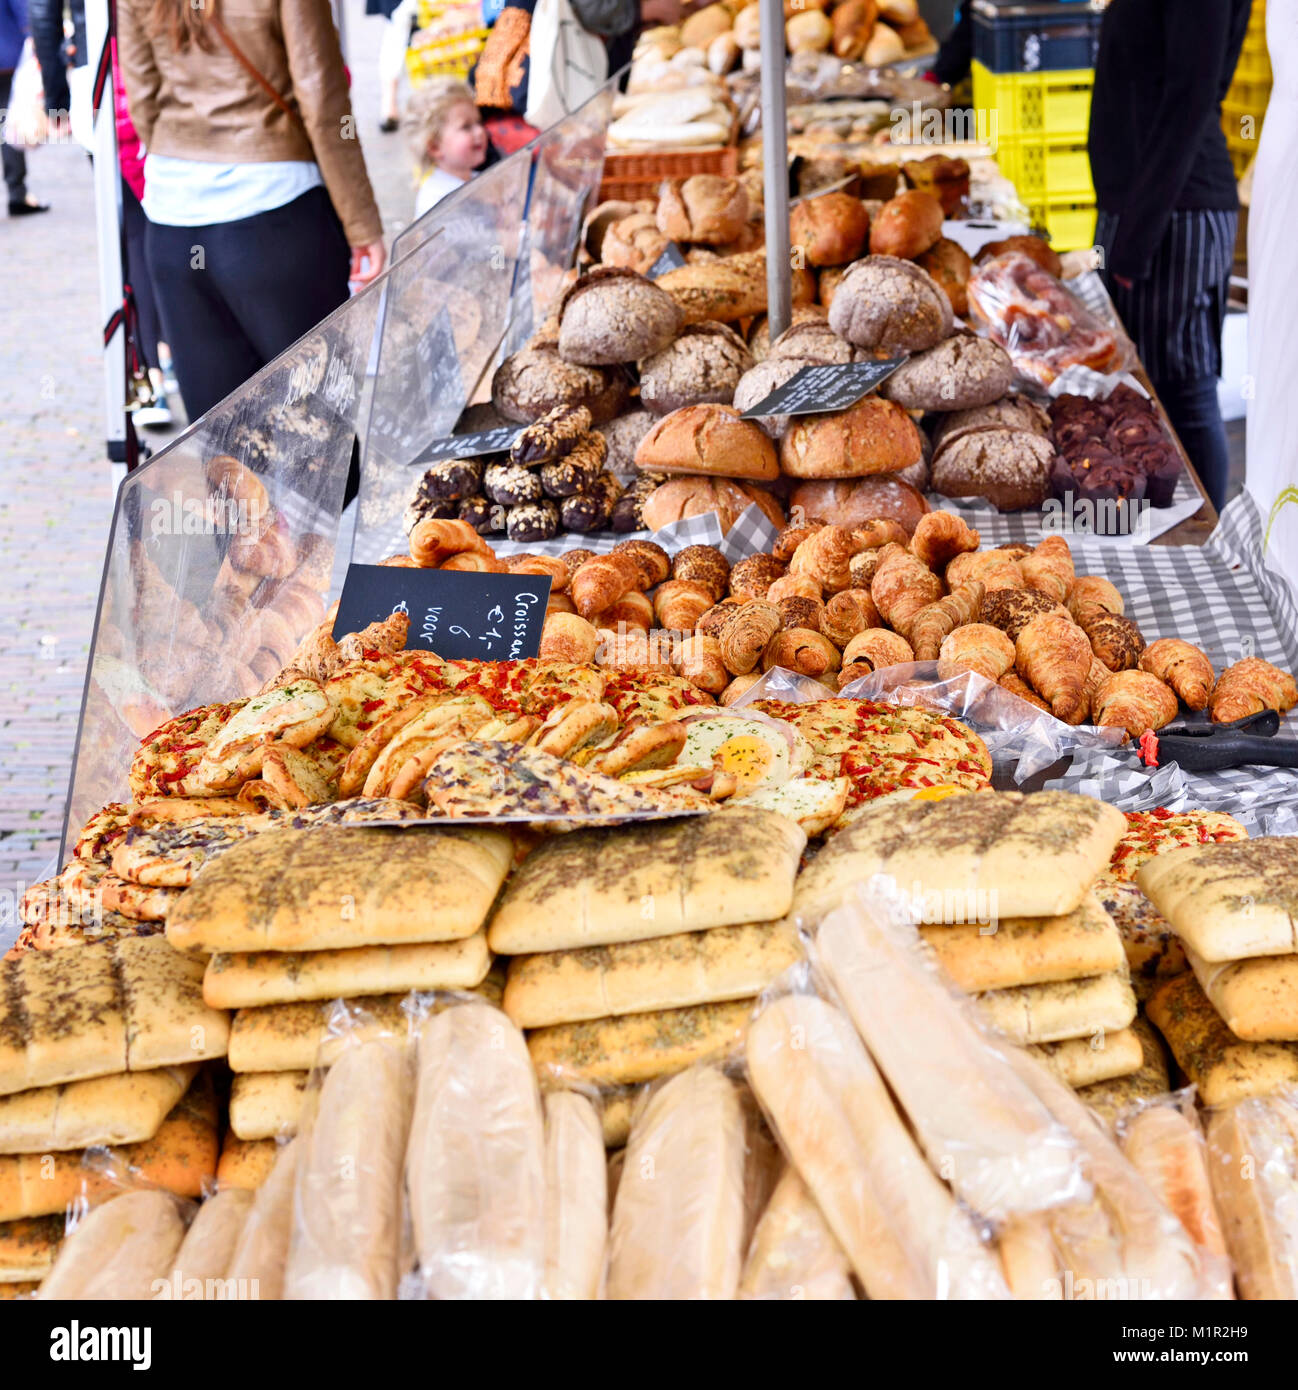 bakery or bread market stall. Fresh baked goods on a street market. Stock Photo